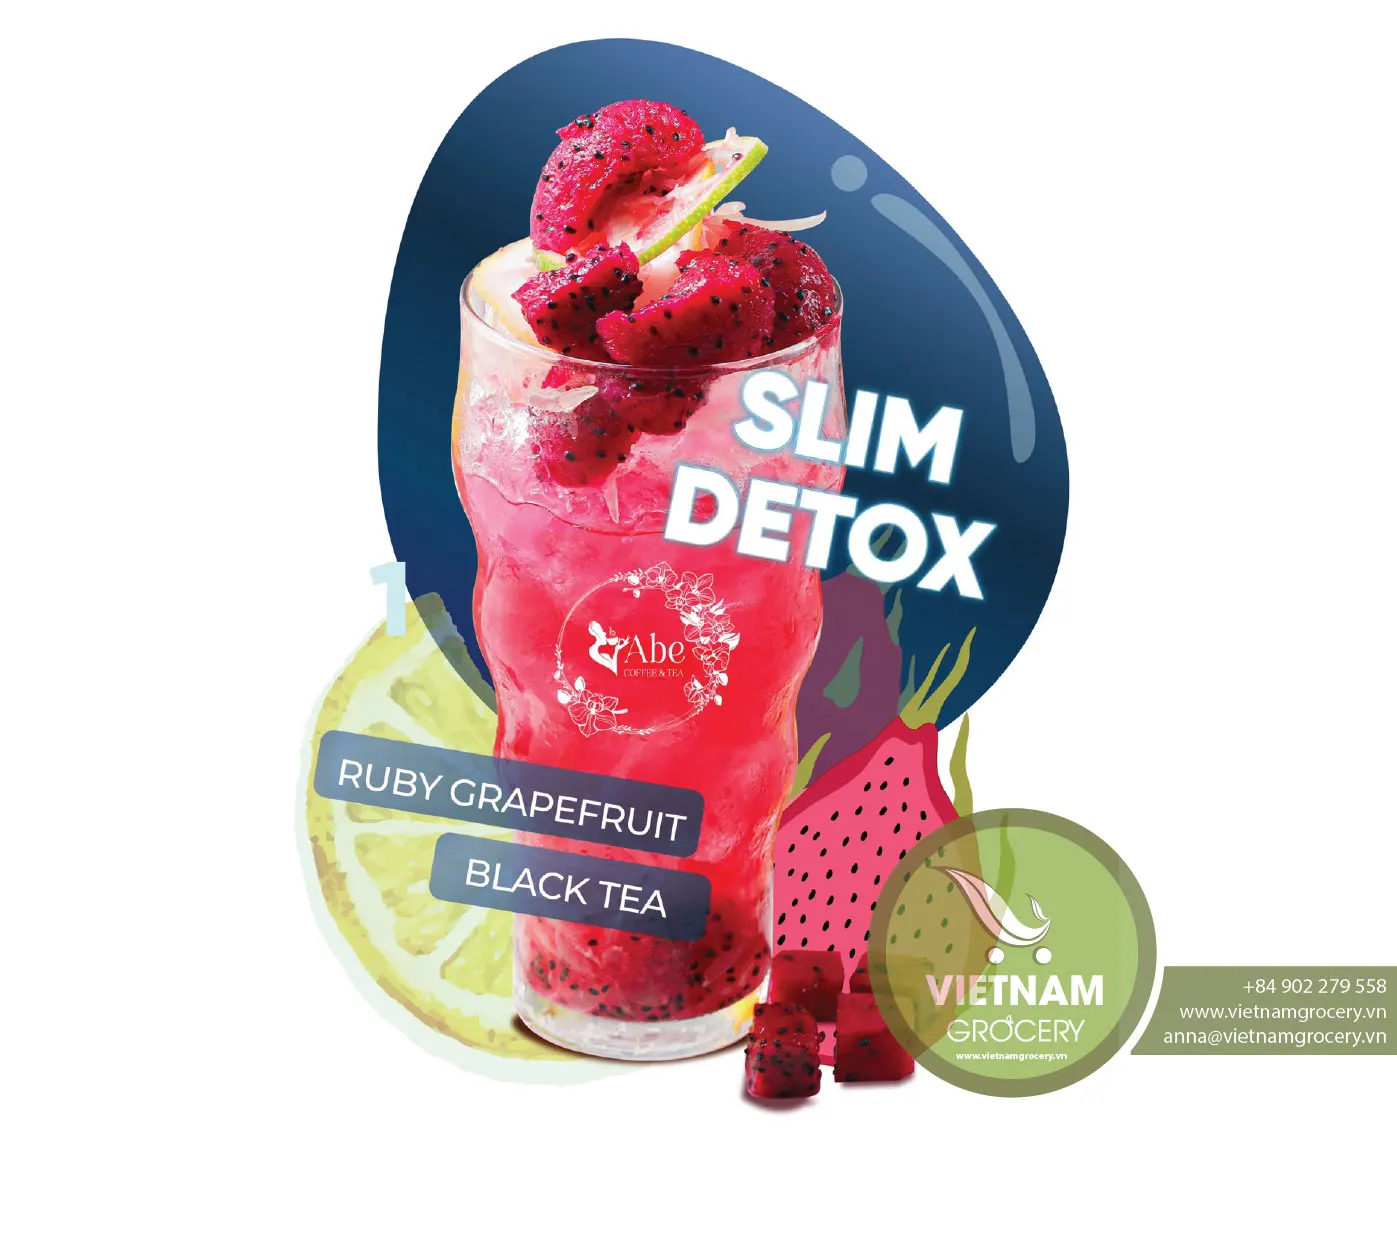 Detox Slim Tea - Slim Detox Ruby Grapefruit Black Tea